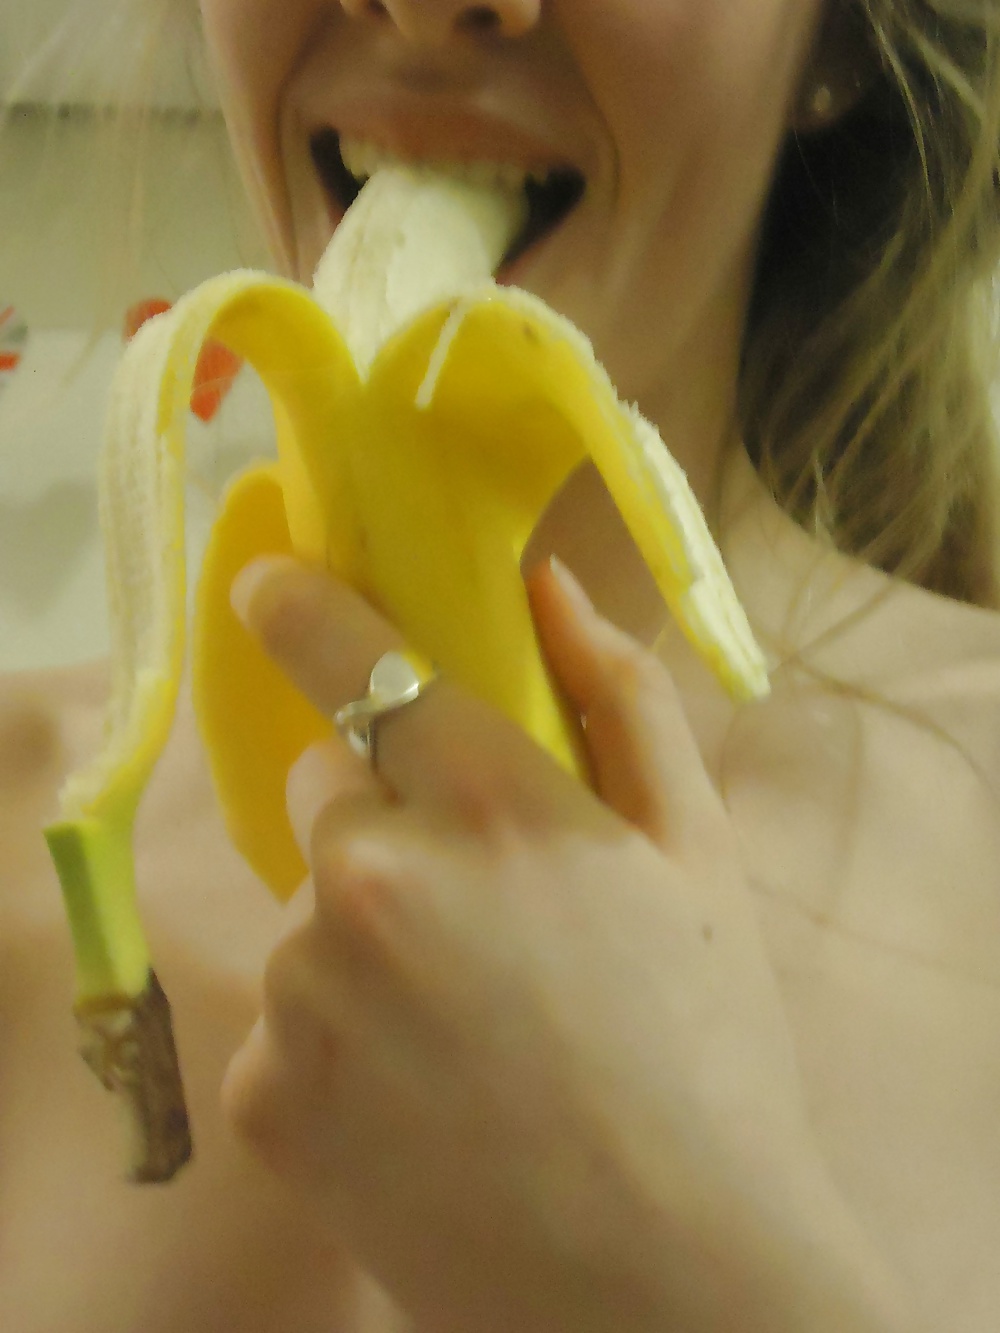 Sexy Pale Amateur Girl Sucks A Banana #34429750